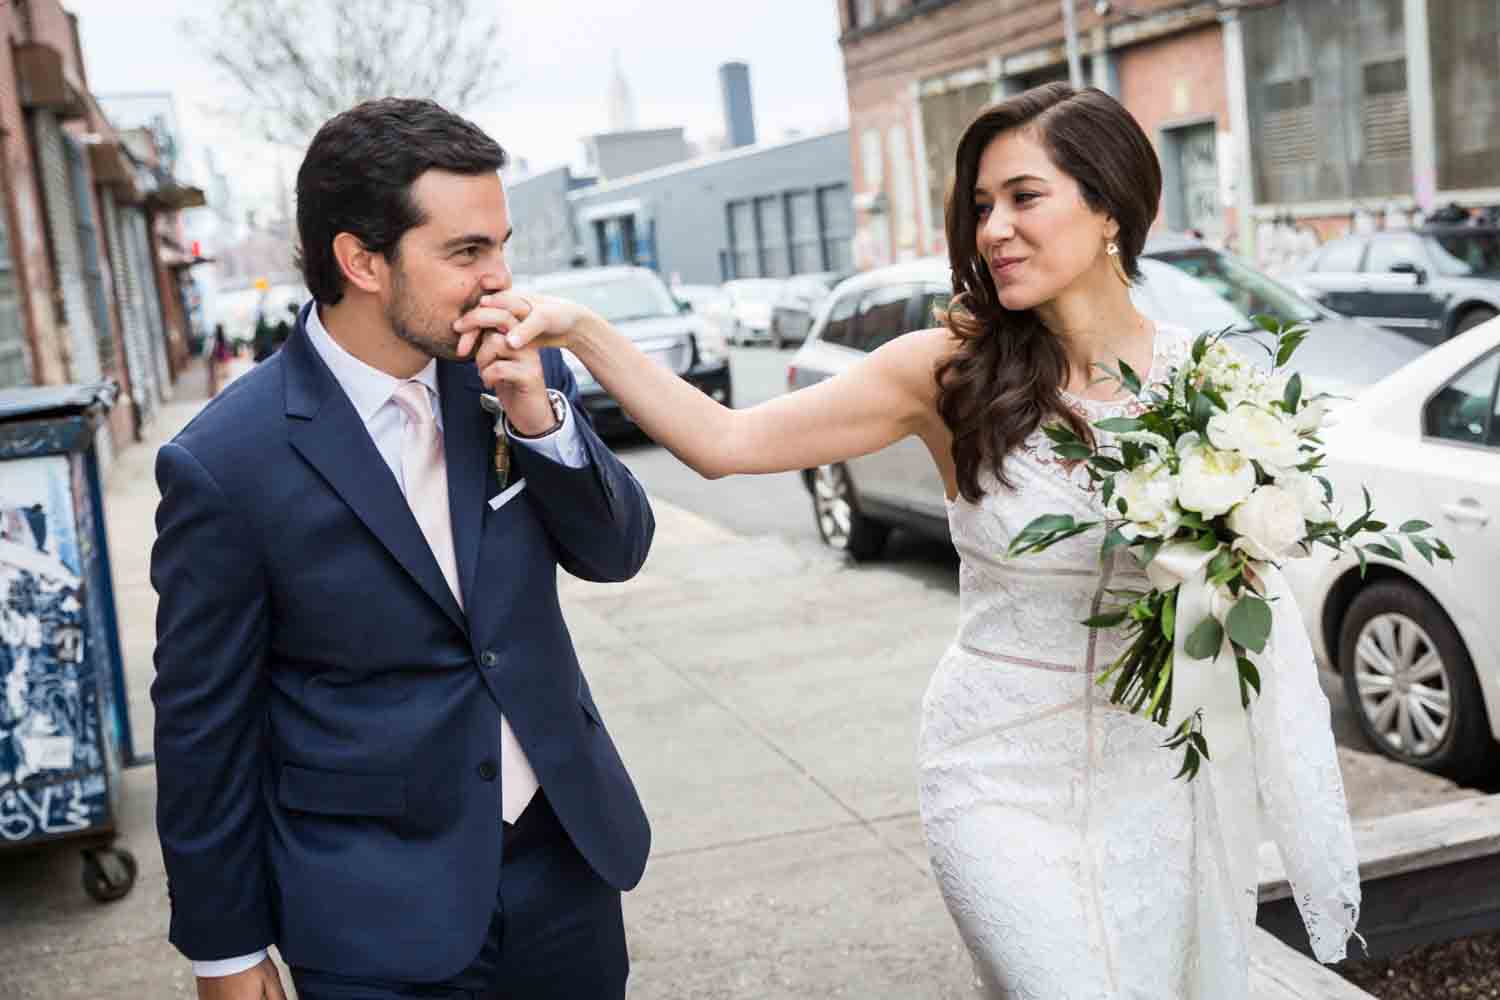 Groom kissing bride's hand on Brooklyn sidewalk